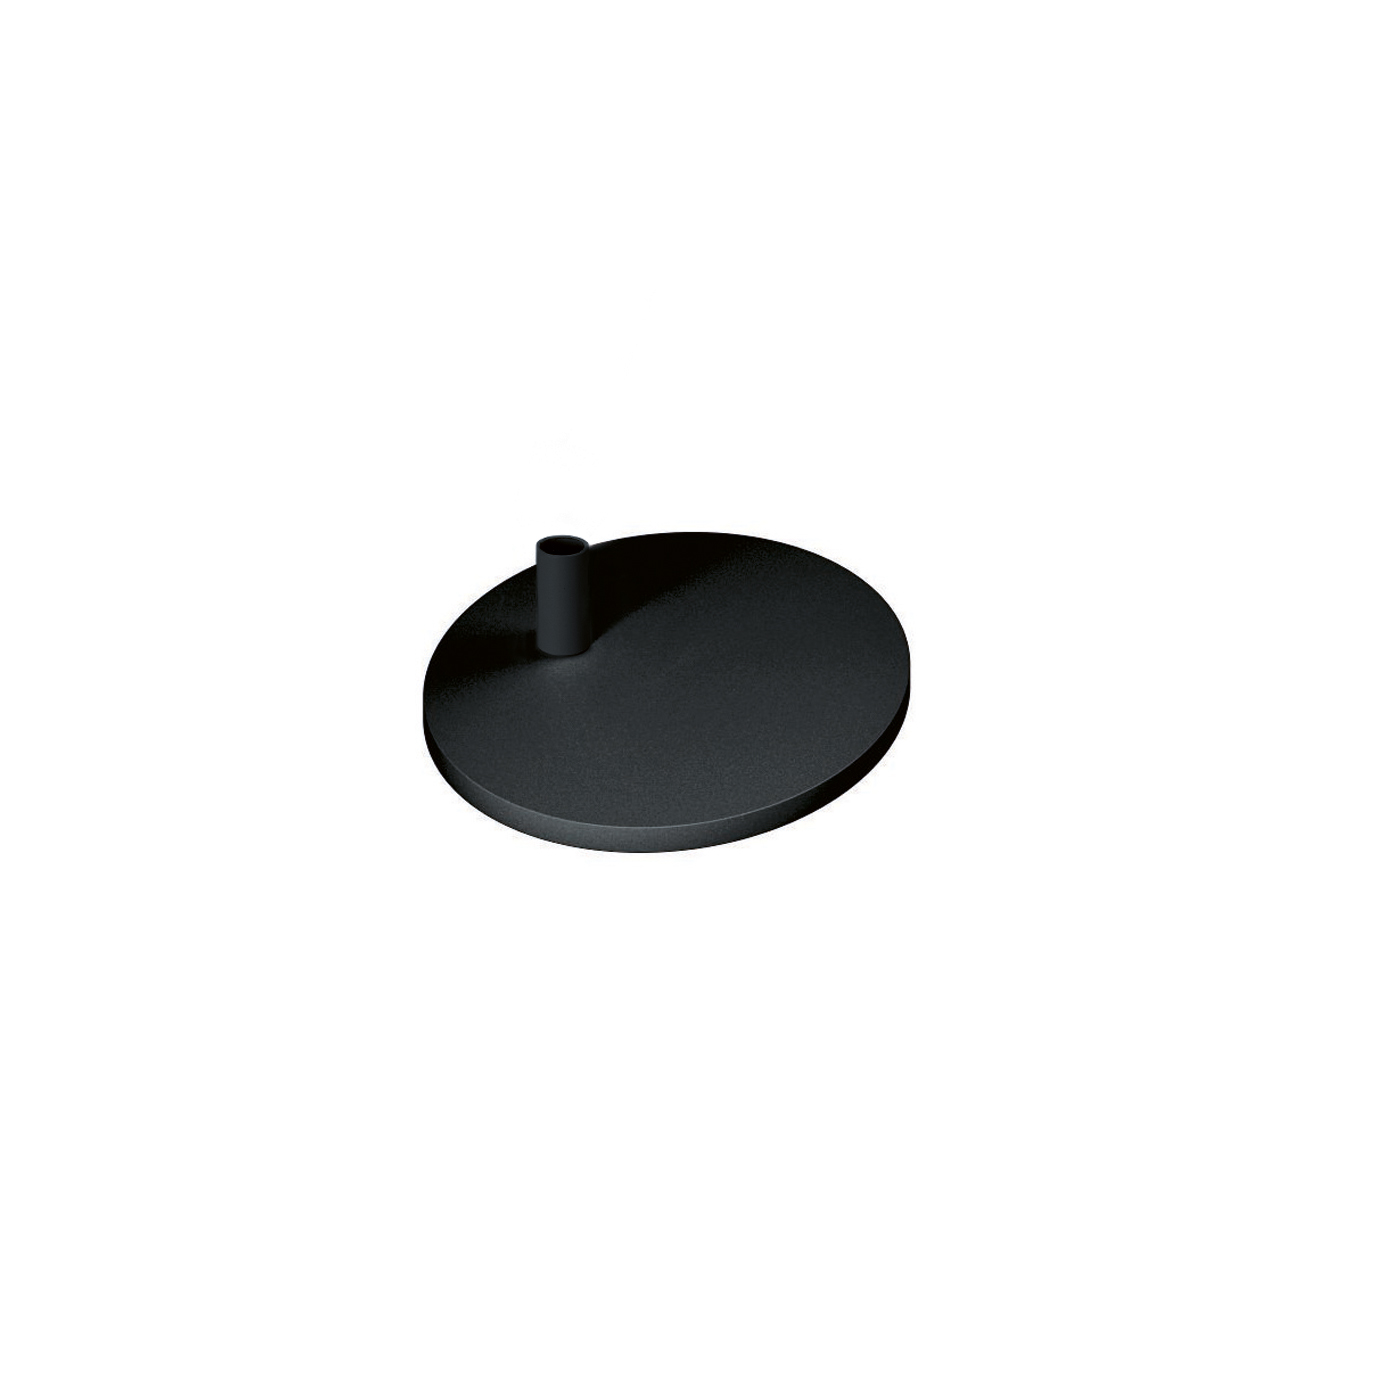 Tabletop Stand, Round, Black, for Para.Mi Bench Light - 1 piece